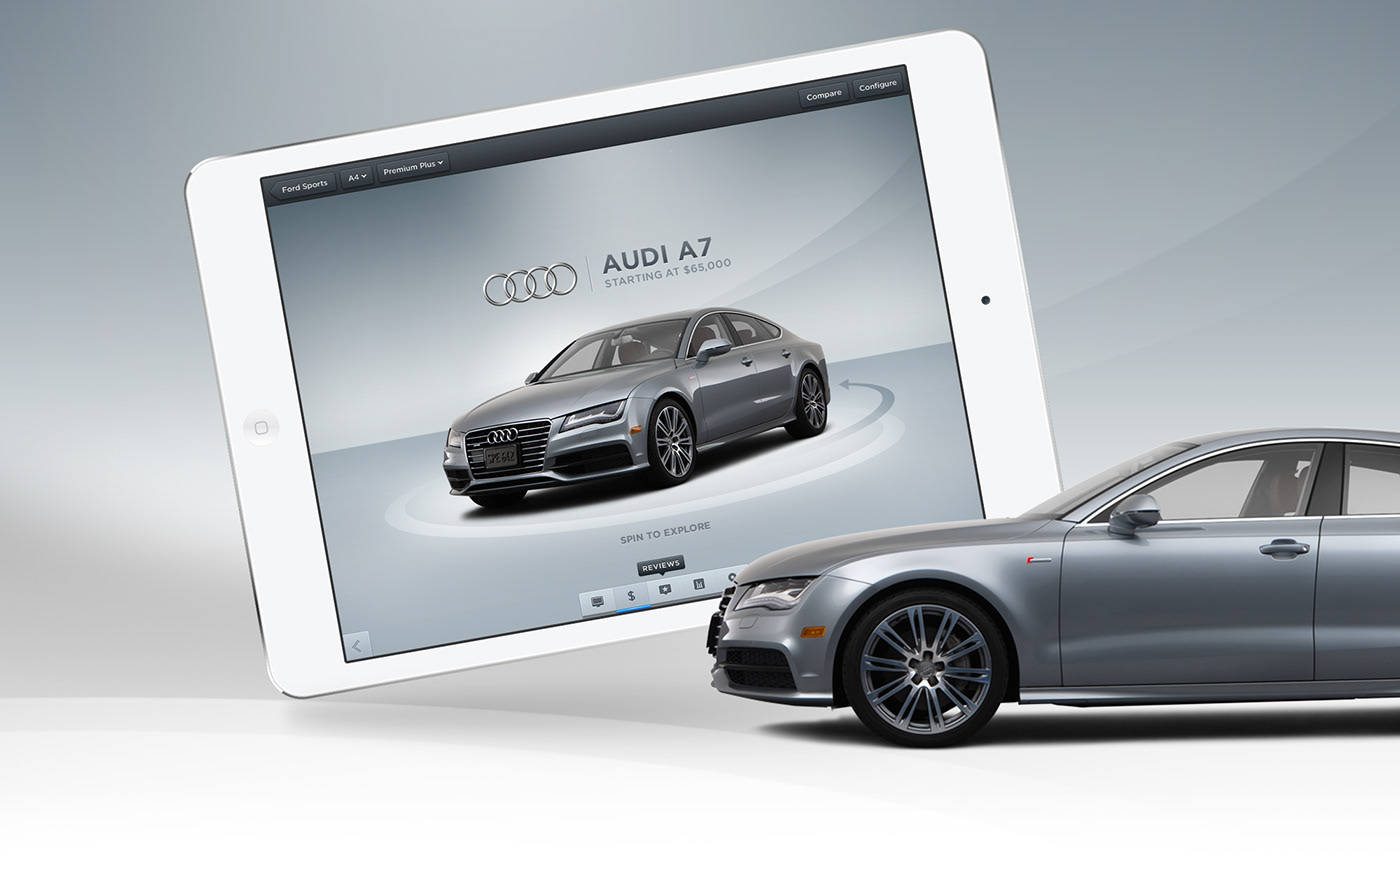 iPad auto show KBB Audi UI ux Cars Consumer Reviews interaction car value